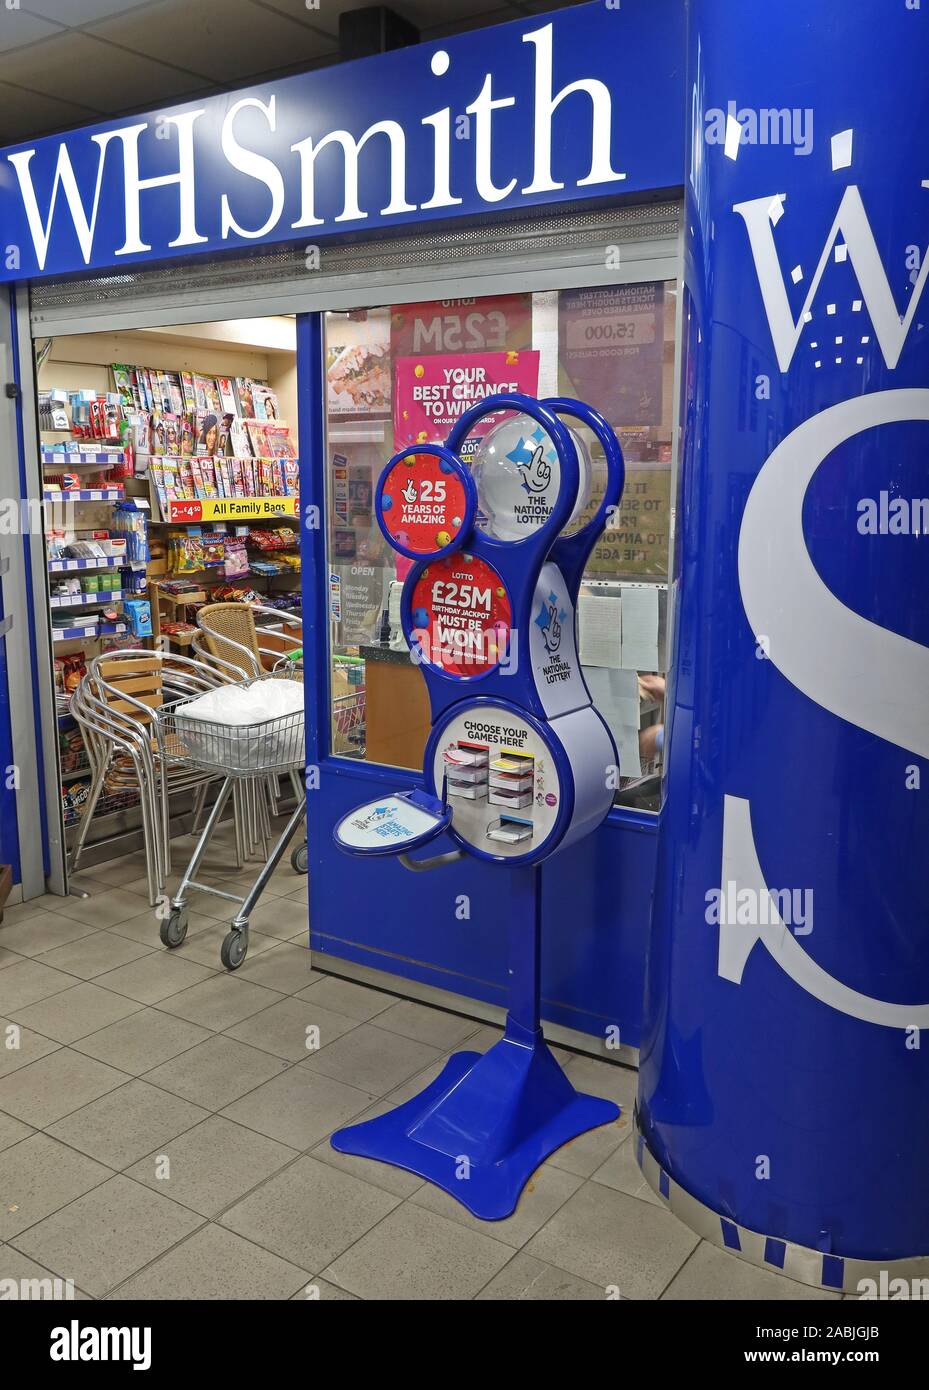 WH Smith,kiosk,franchise & national lottery, at , Bank Quay,railway station,Warrington, Cheshire,England,UK, WA1 1LW Stock Photo